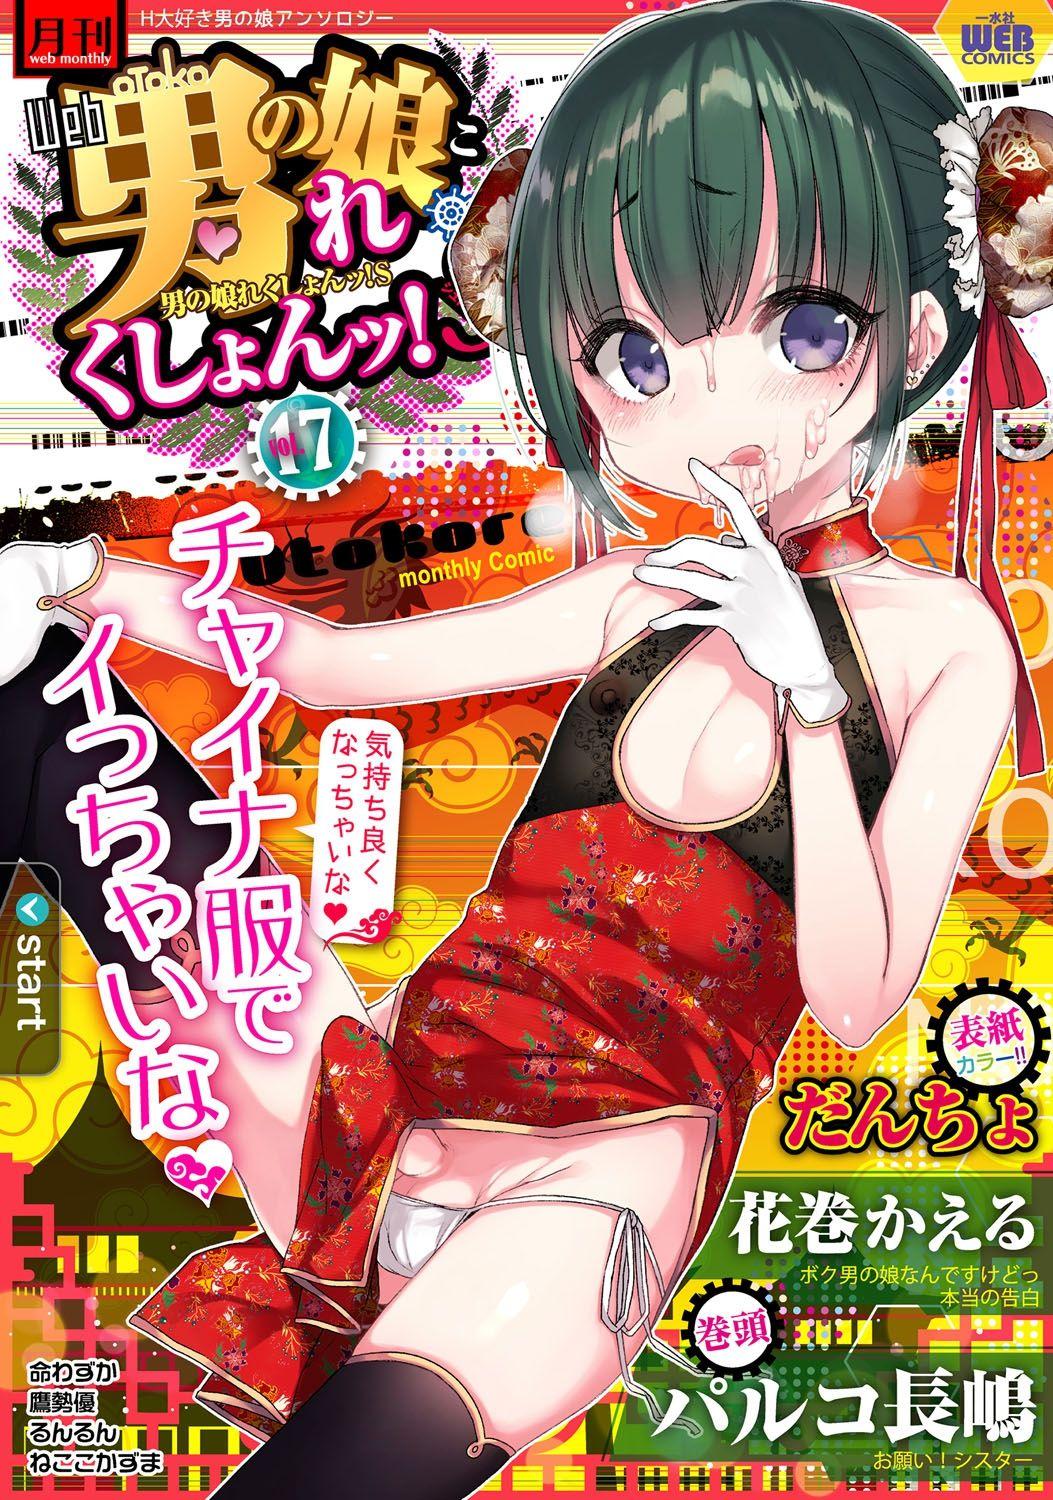 Gekkan Web Otoko no Ko-llection! S Covers 16